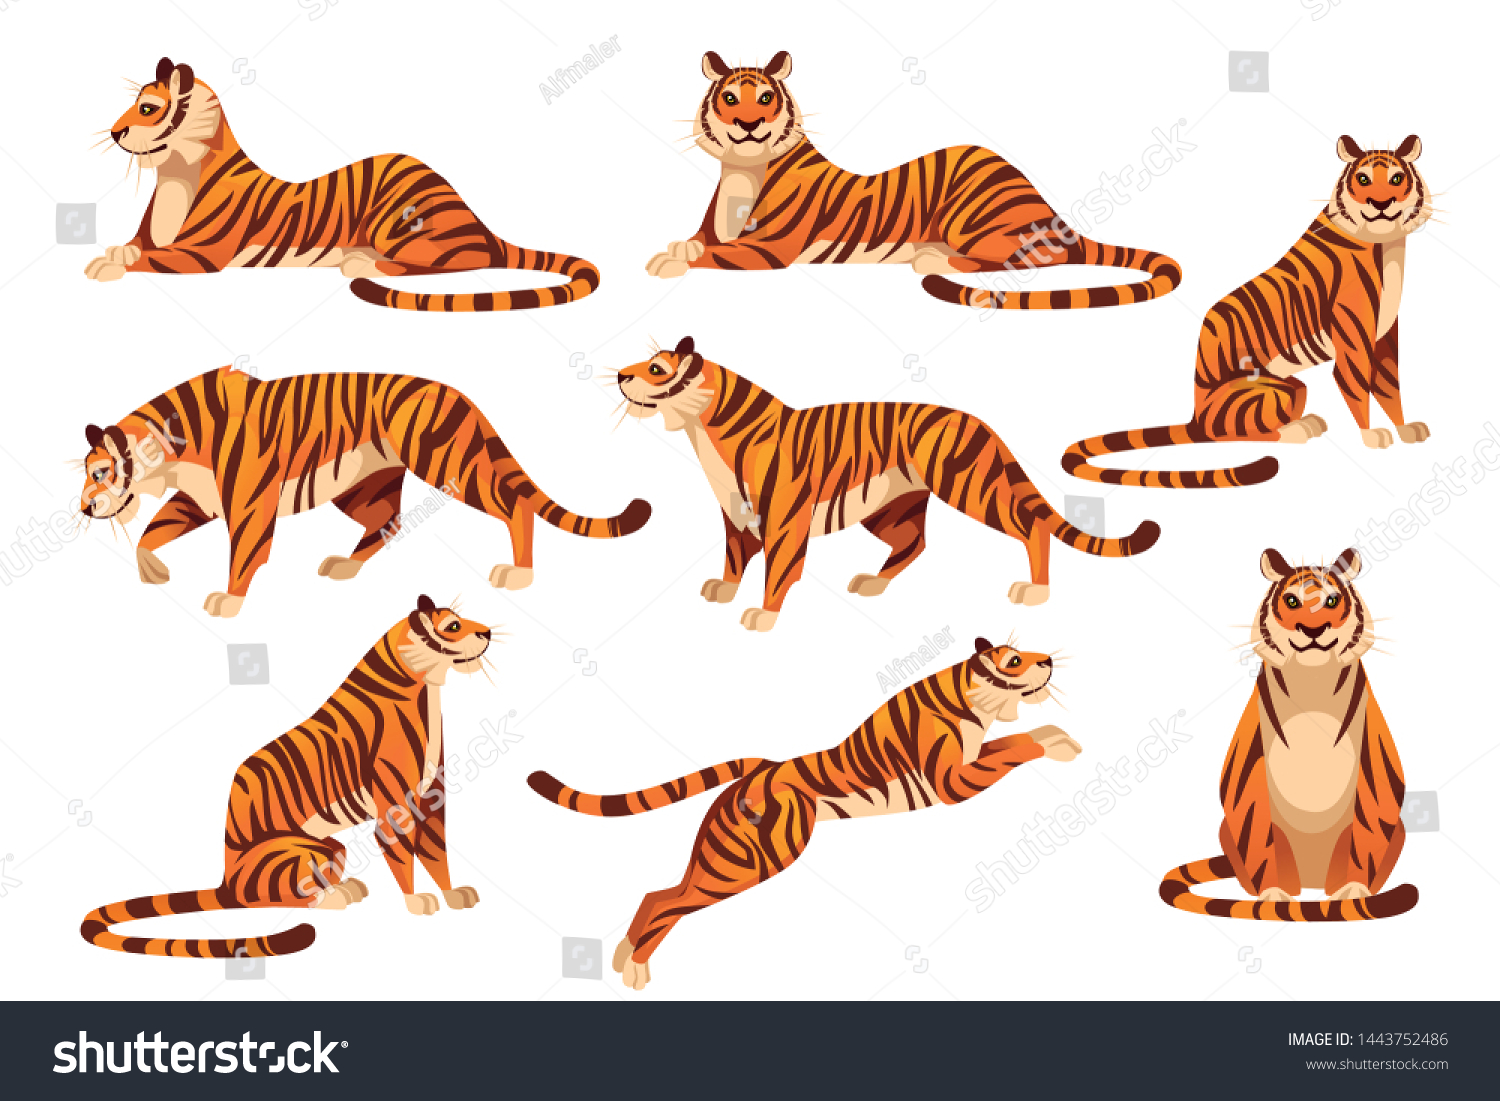 Tiger mane Images, Stock Photos & Vectors | Shutterstock